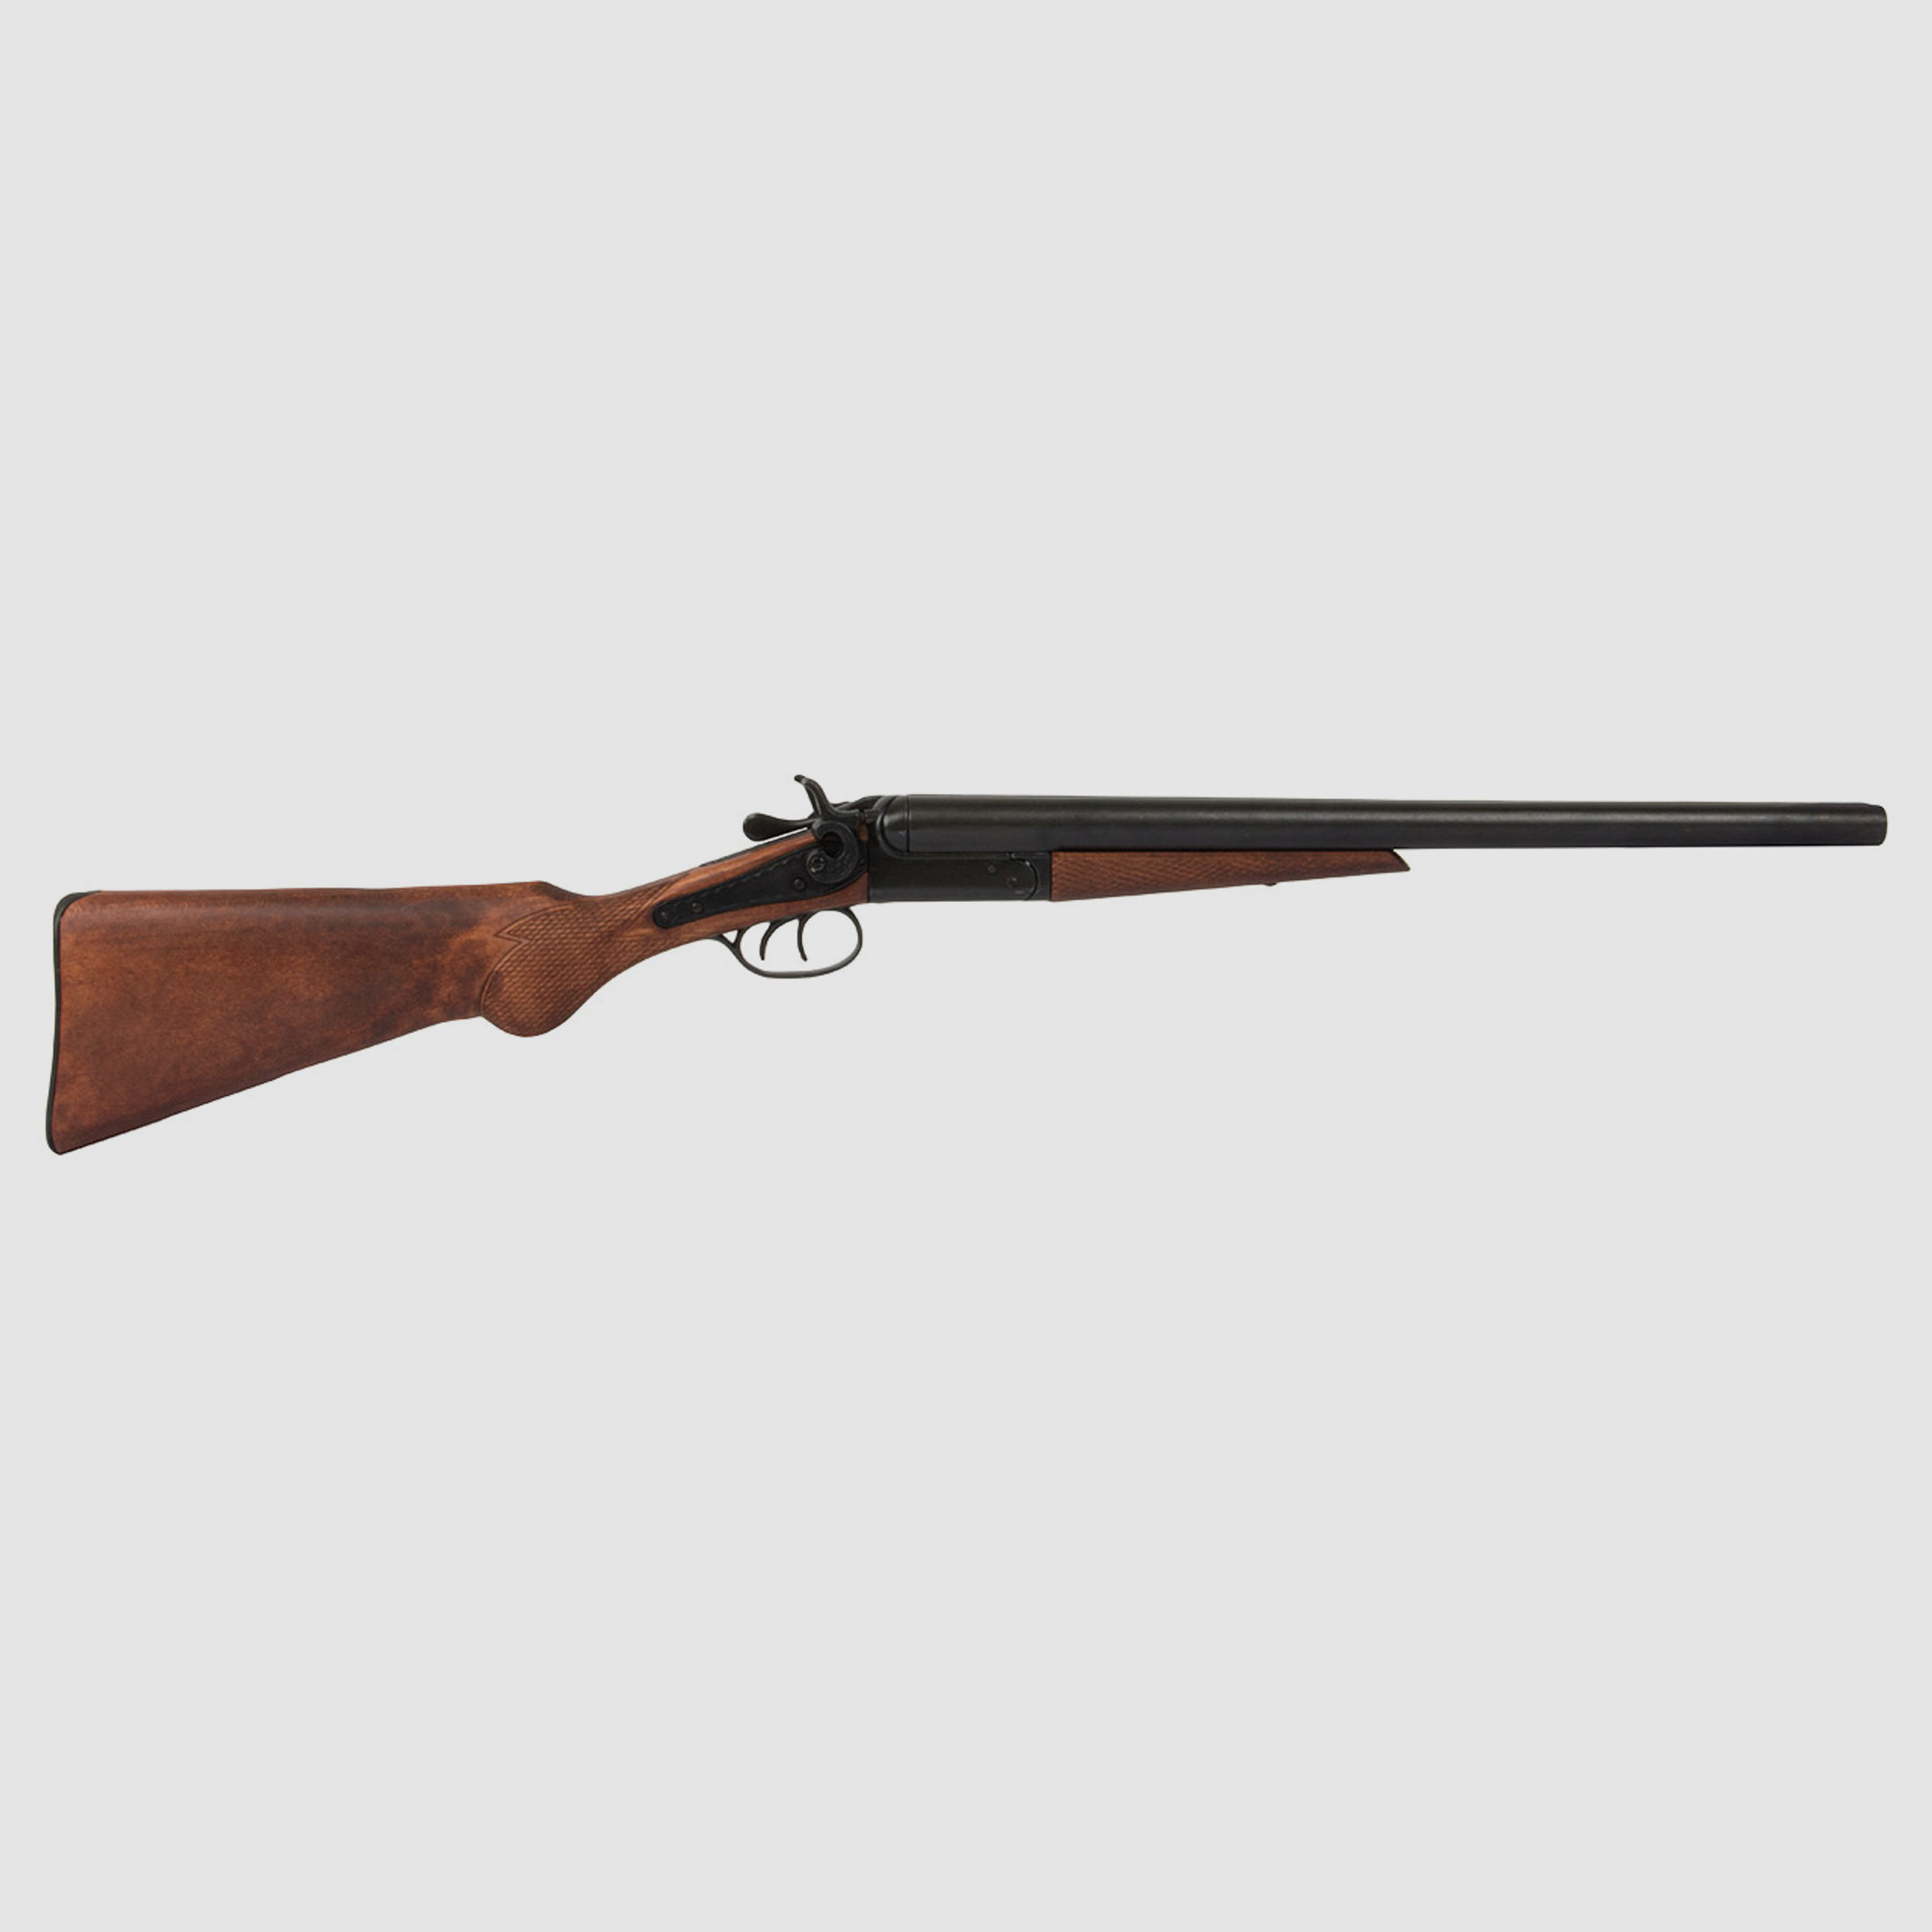 B-Ware Deko Doppelhahn Schrotflinte Wyatt Earp Double Barrel Shotgun USA 1868 voll beweglich LĂ¤nge 89 cm schwarz